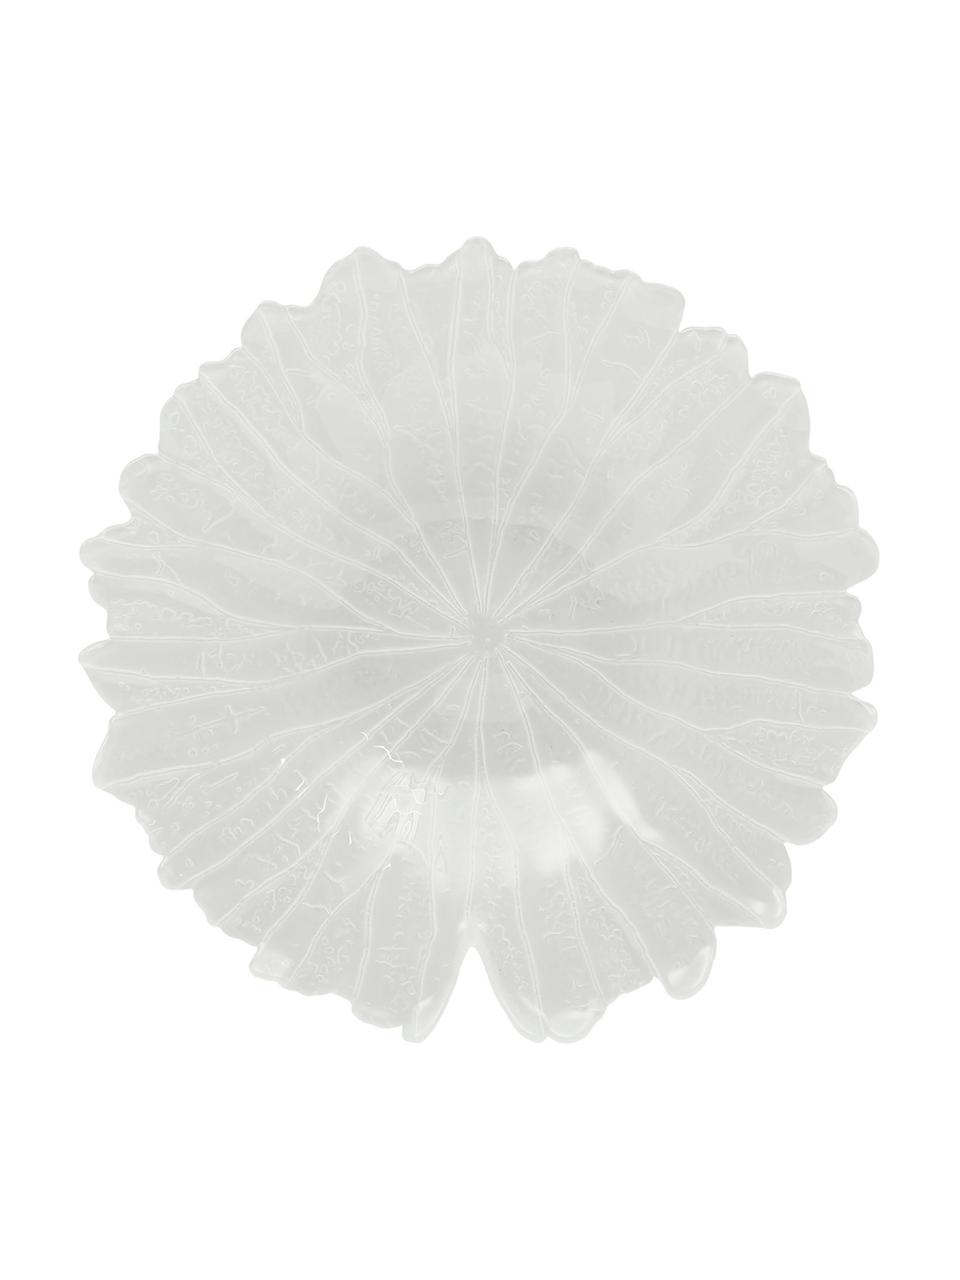 Serveerschalen Botanic in bladvorm van glas, Ø 33 cm, 4 stuks, Glas, Wit, Ø 33 x H 6 cm